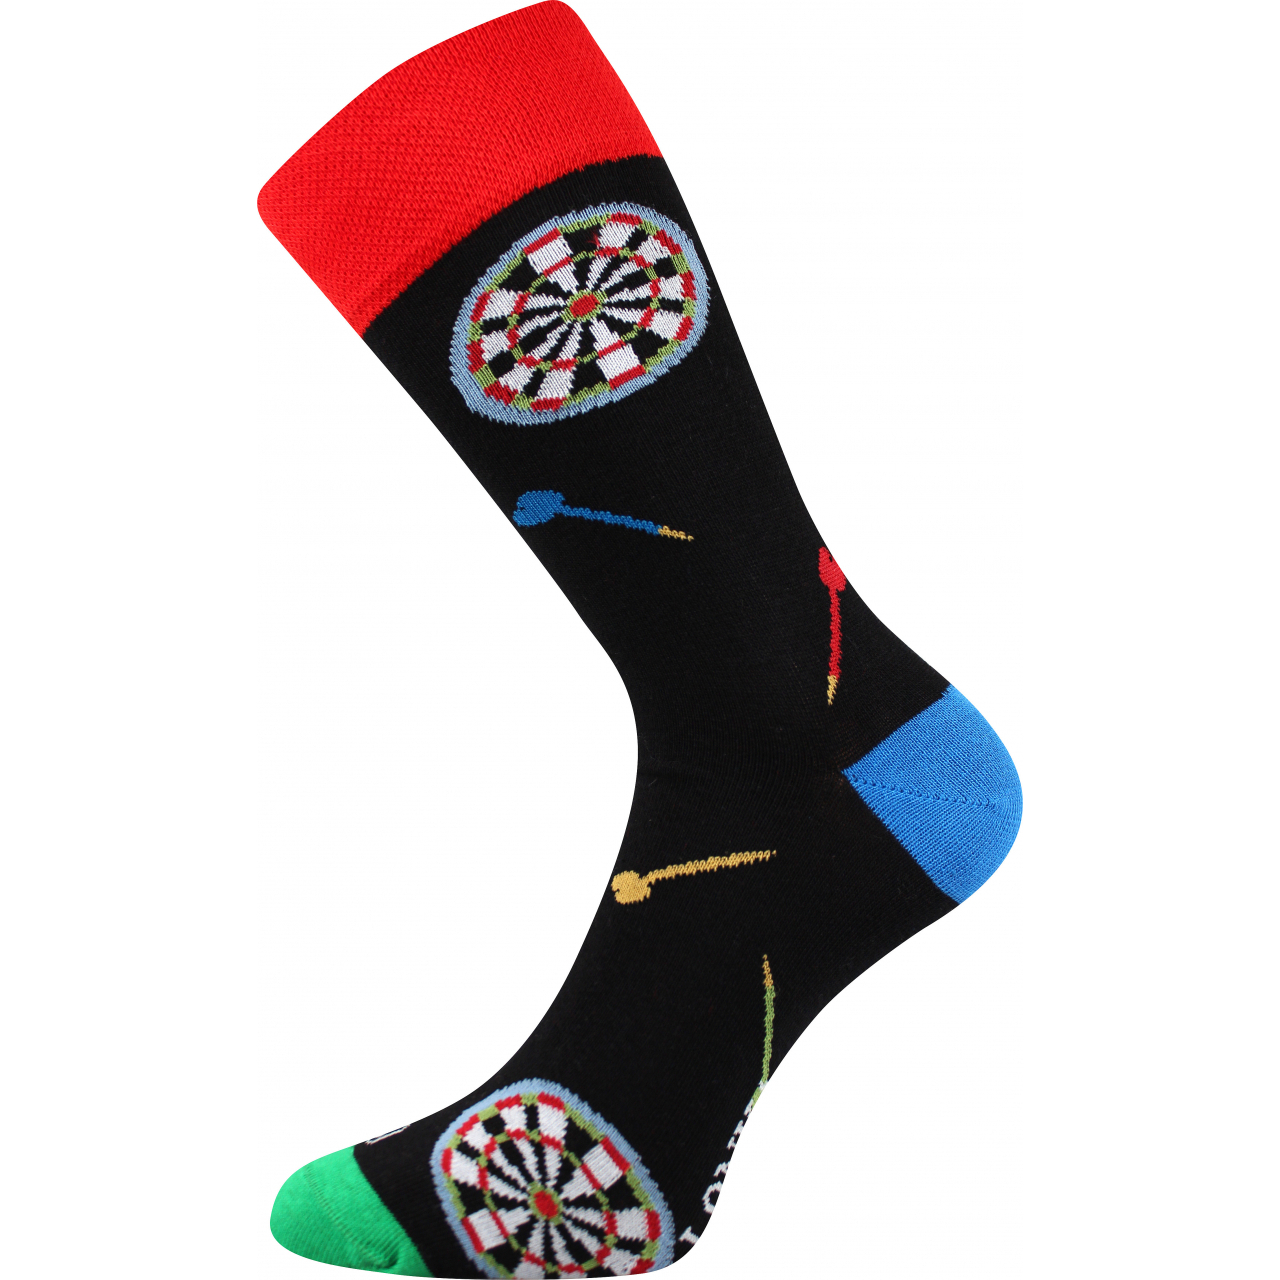 Ponožky unisex trendy Lonka Woodoo Šipky - černé-červené, 43-46